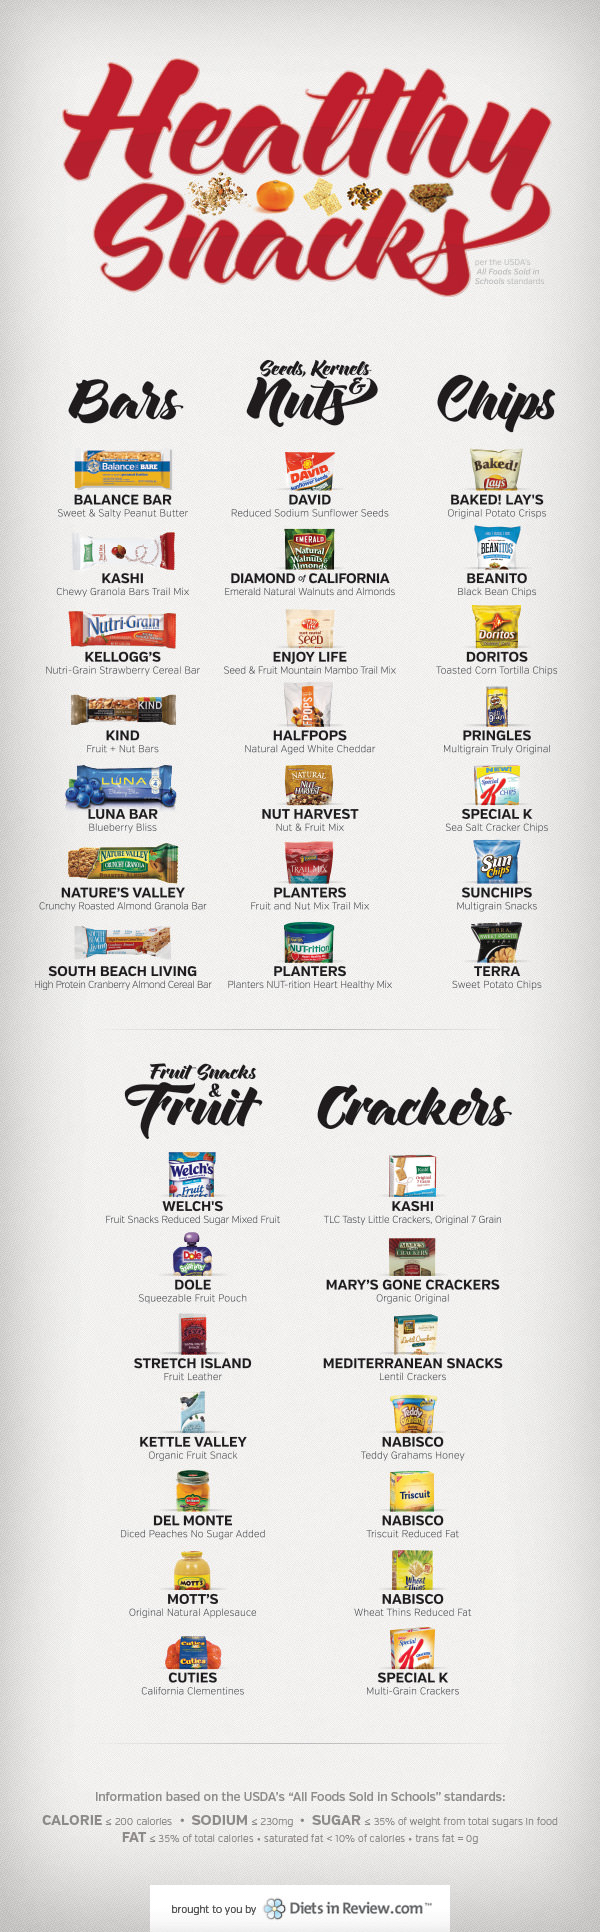 healthy snacks usda guidelines